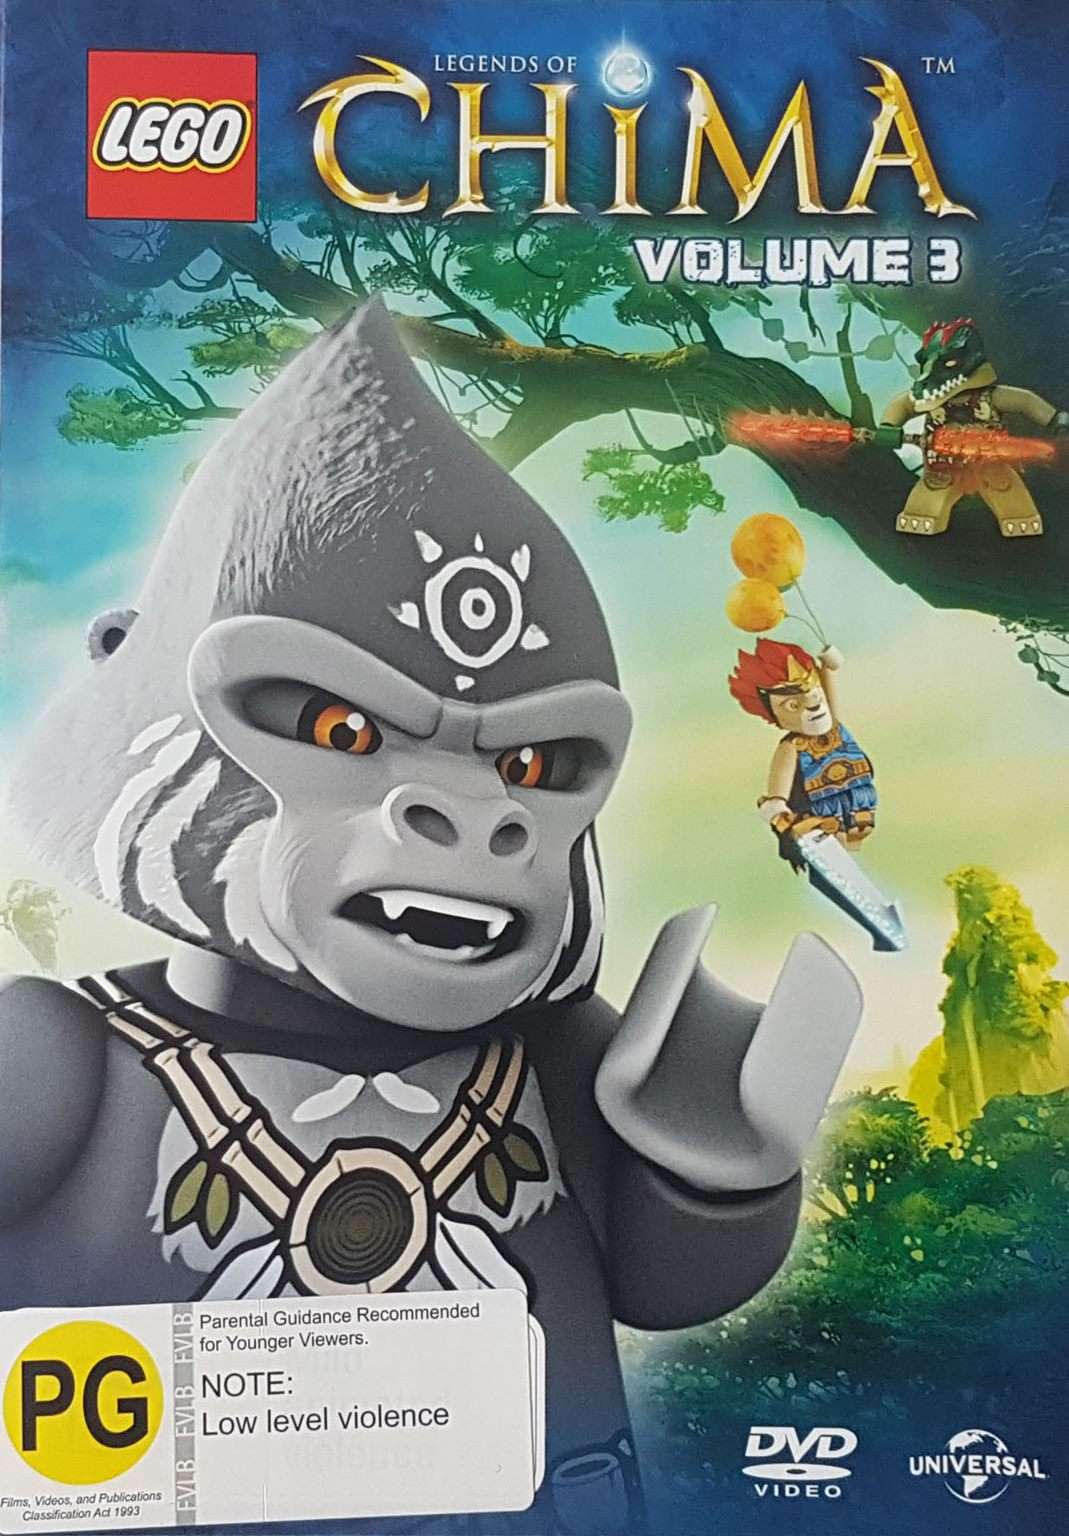 Lego Legends of Chima Volume 3